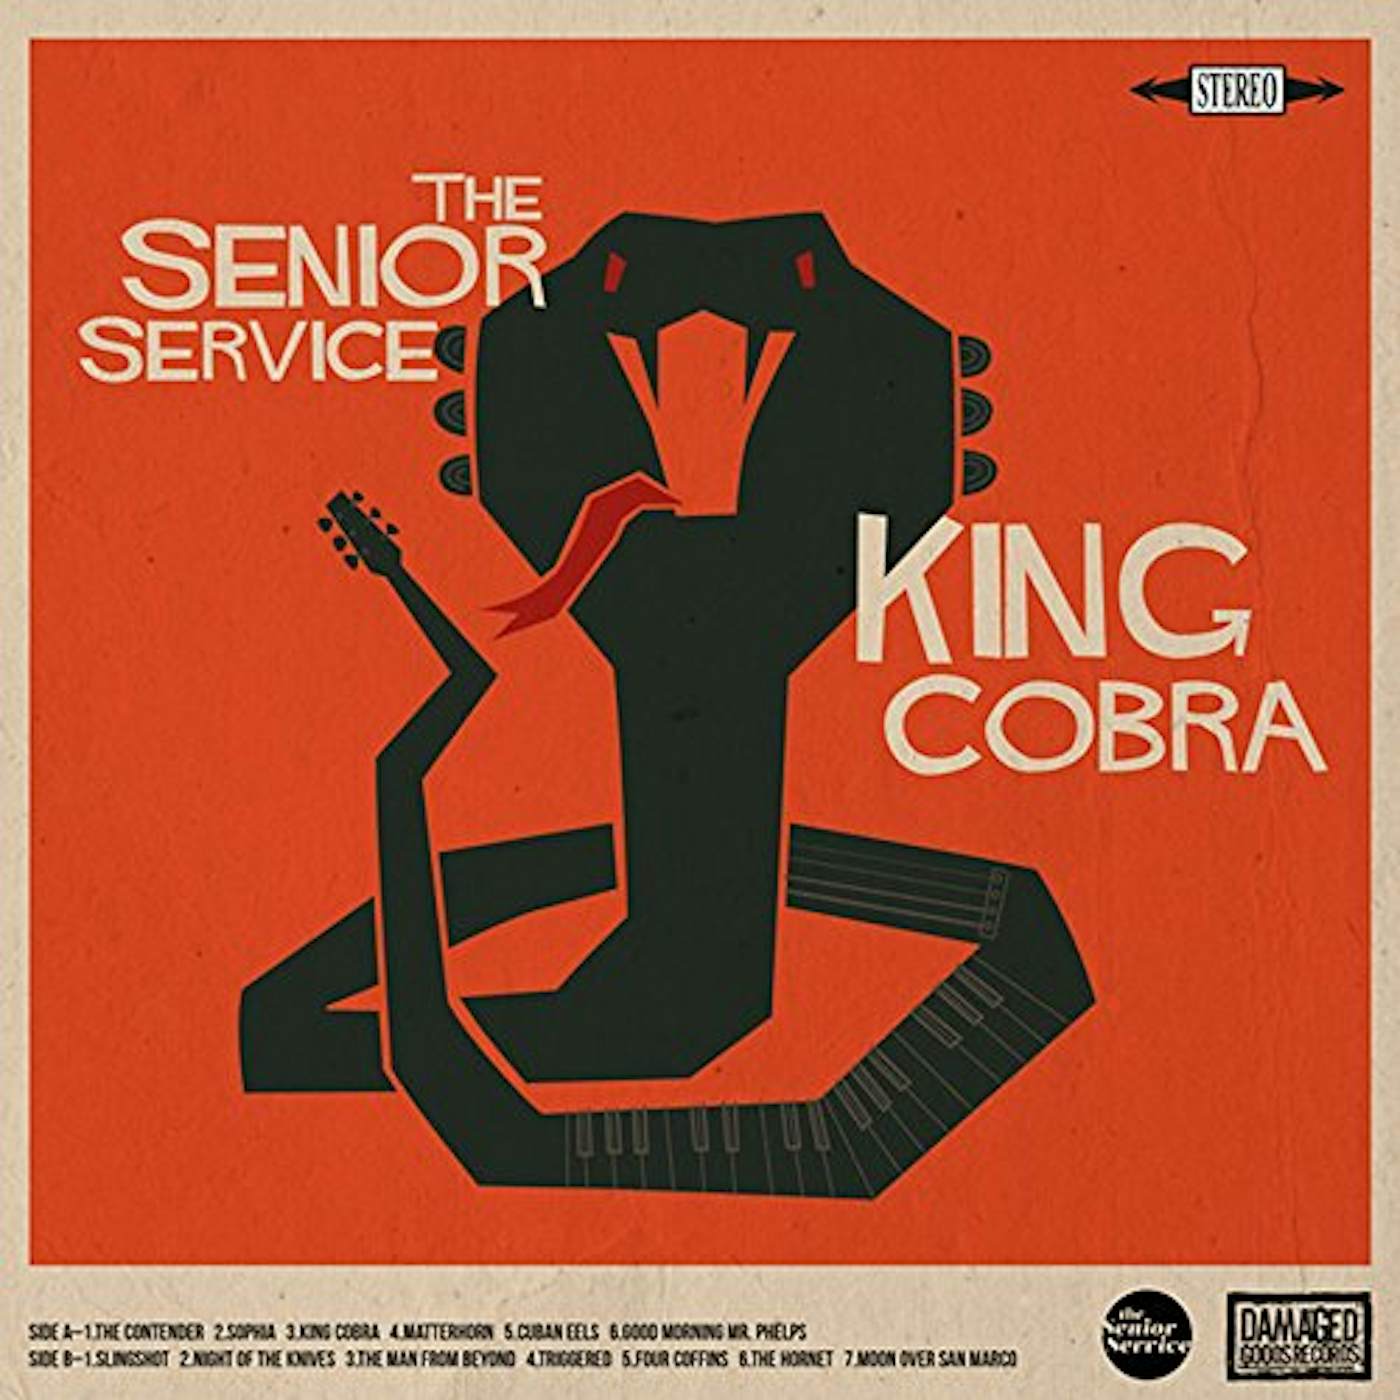 The Senior Service KING COBRA - Original Soundtrack CD